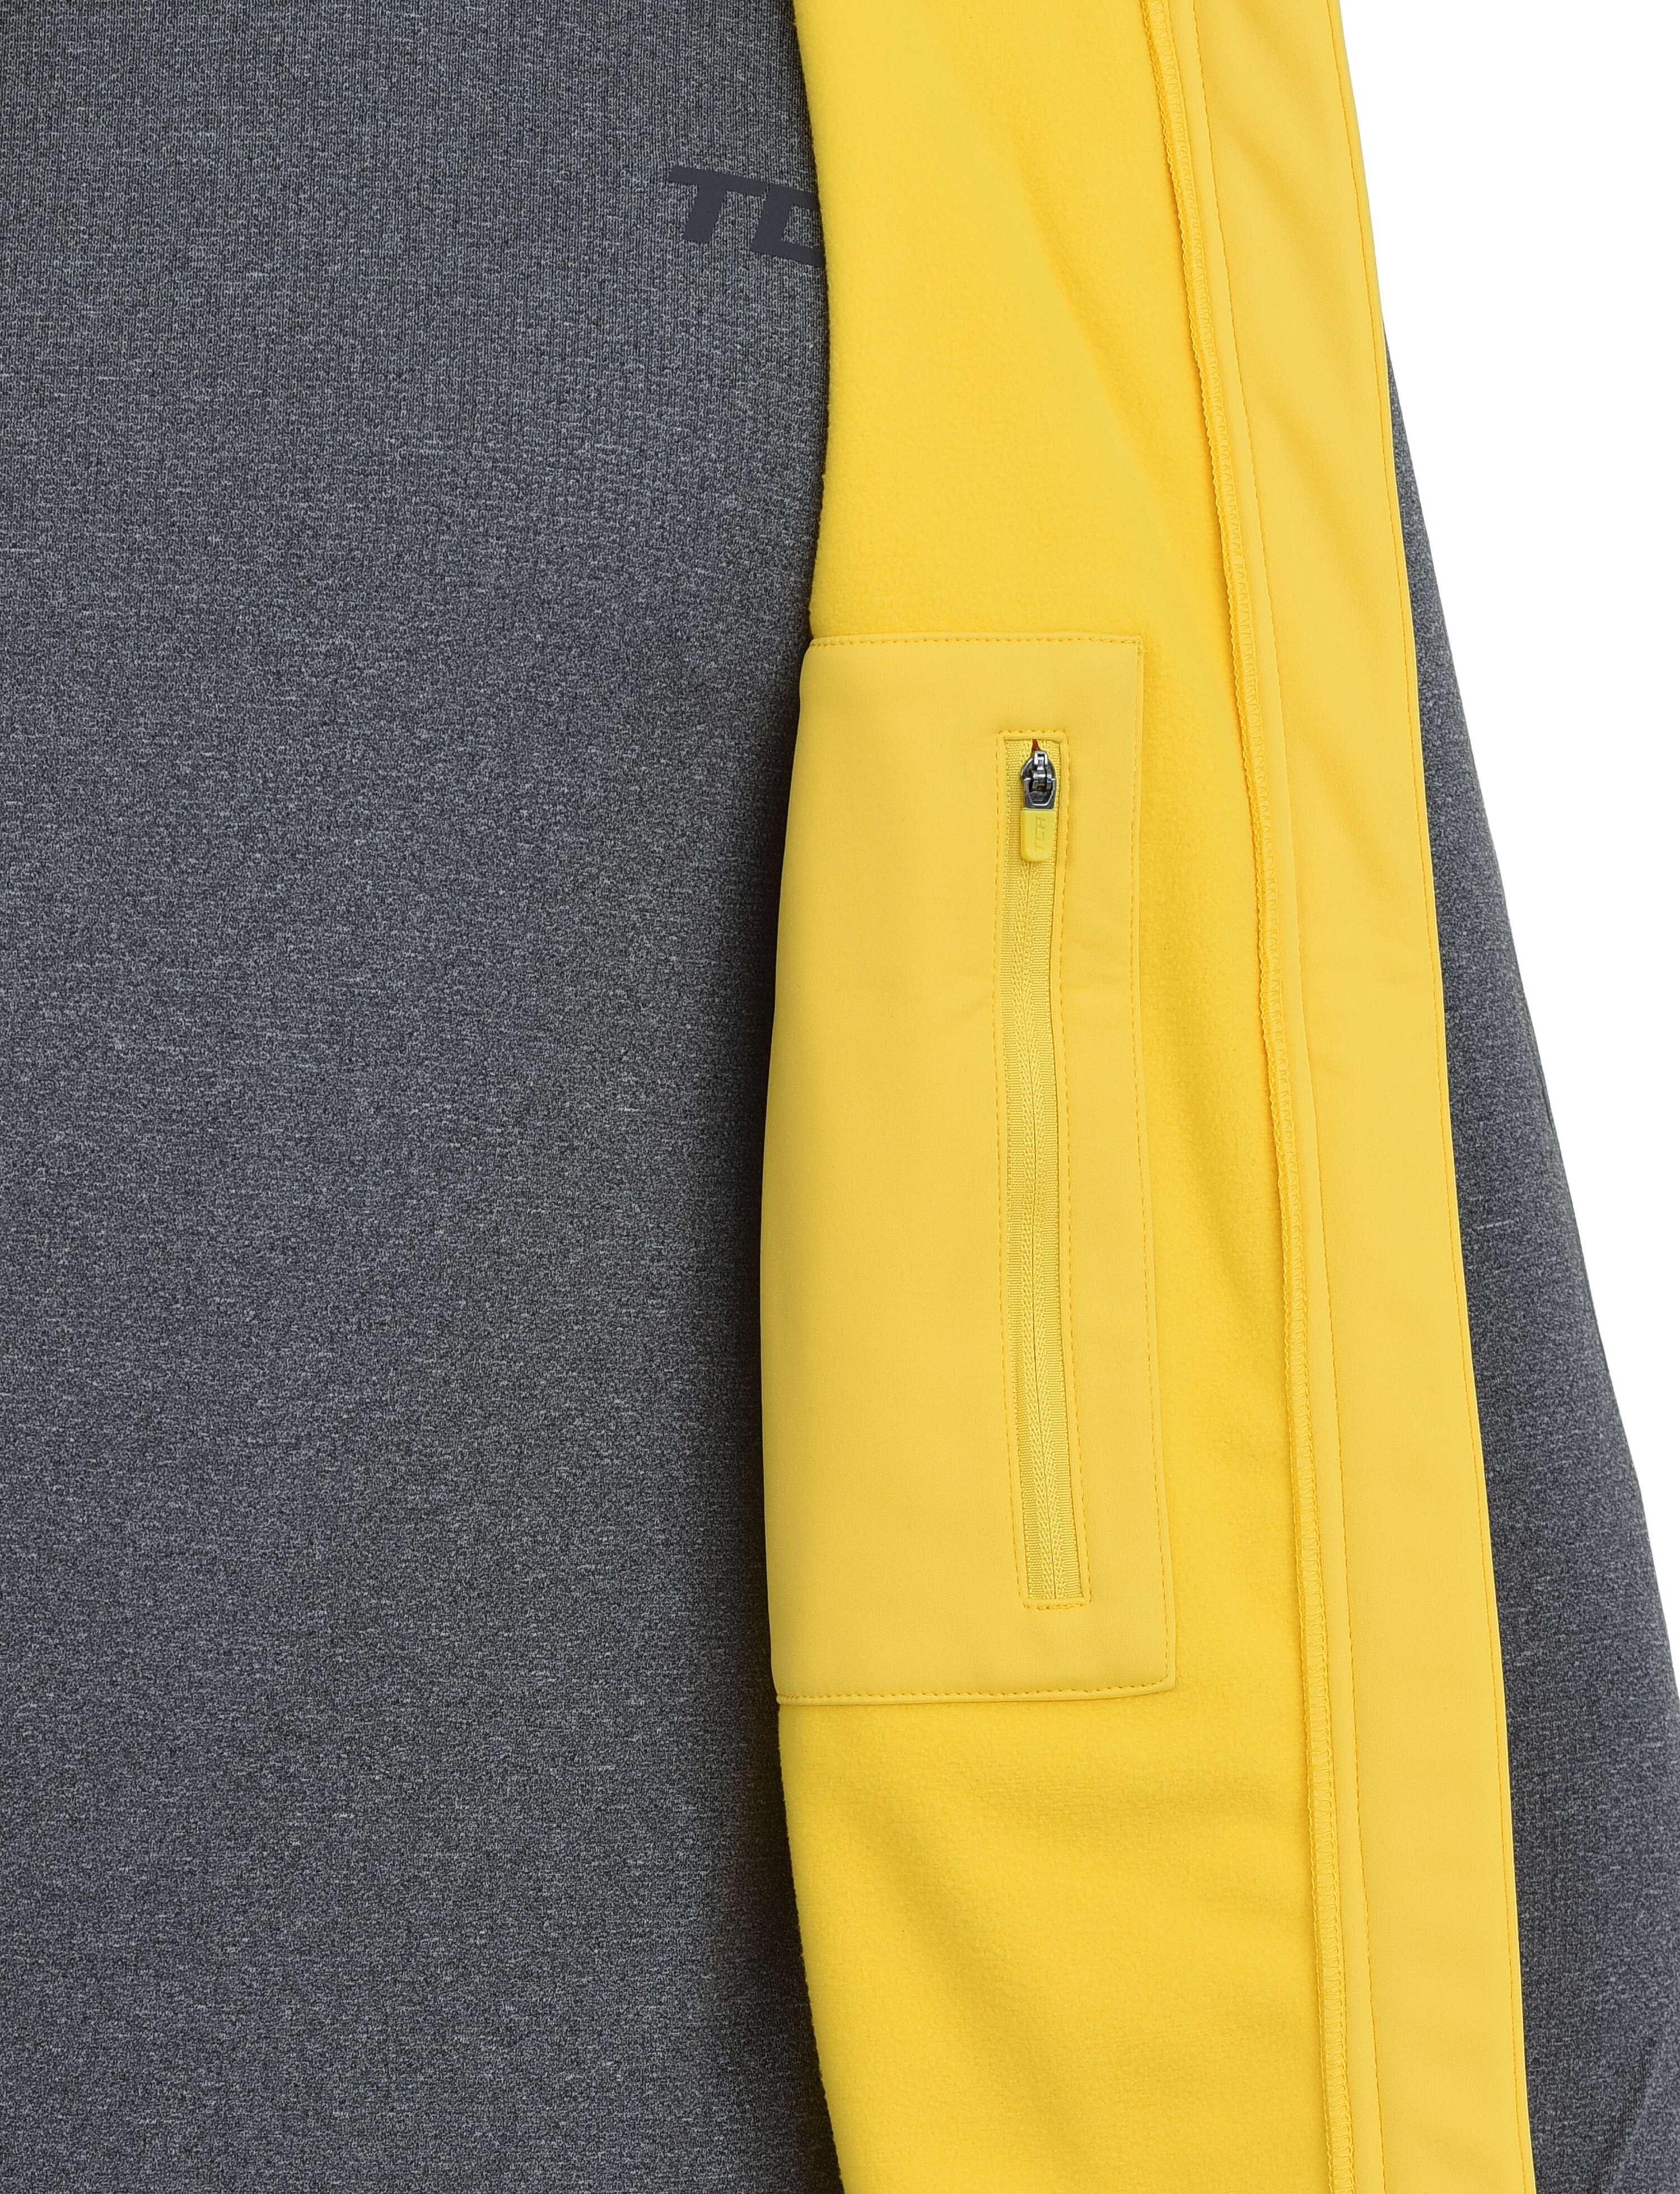 Men's Flyweight Wind-Proof Gilet with Zip Pockets - Vibrant Yellow 5/5